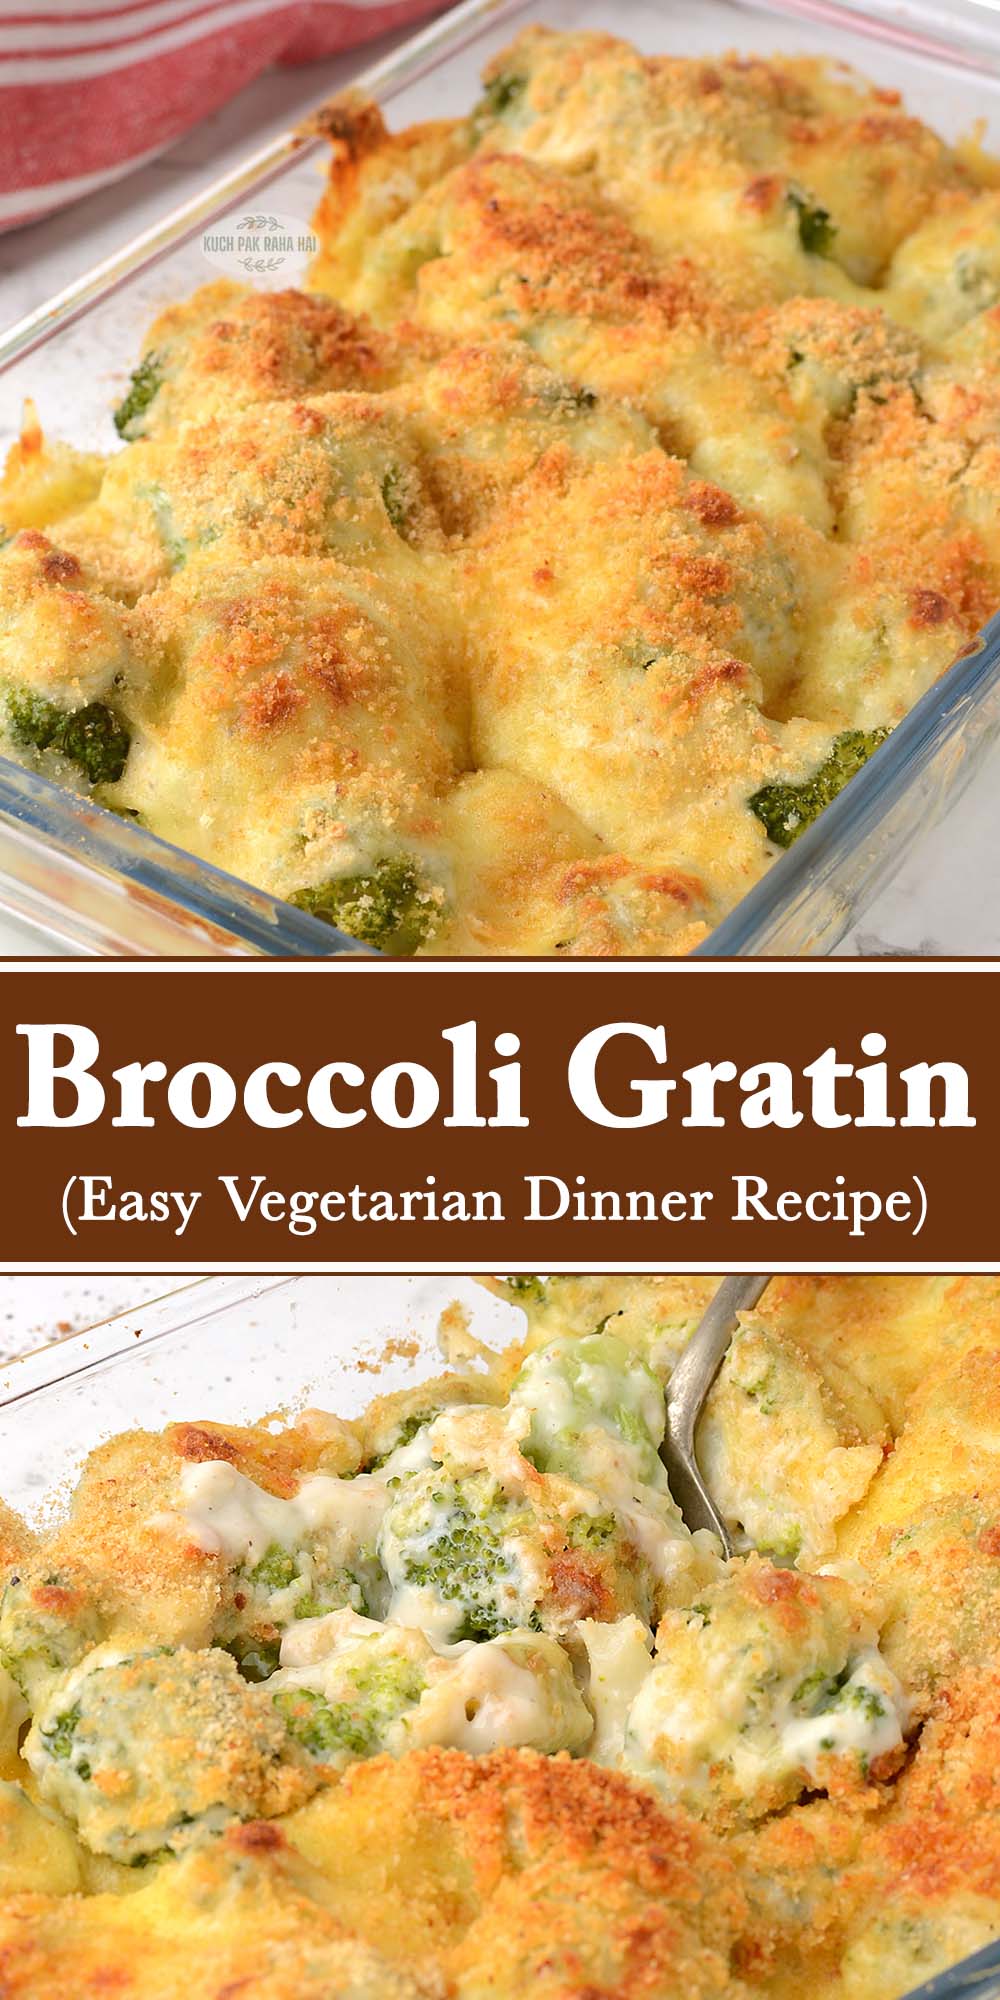 Broccoli gratin vegetarian casserole recipe.